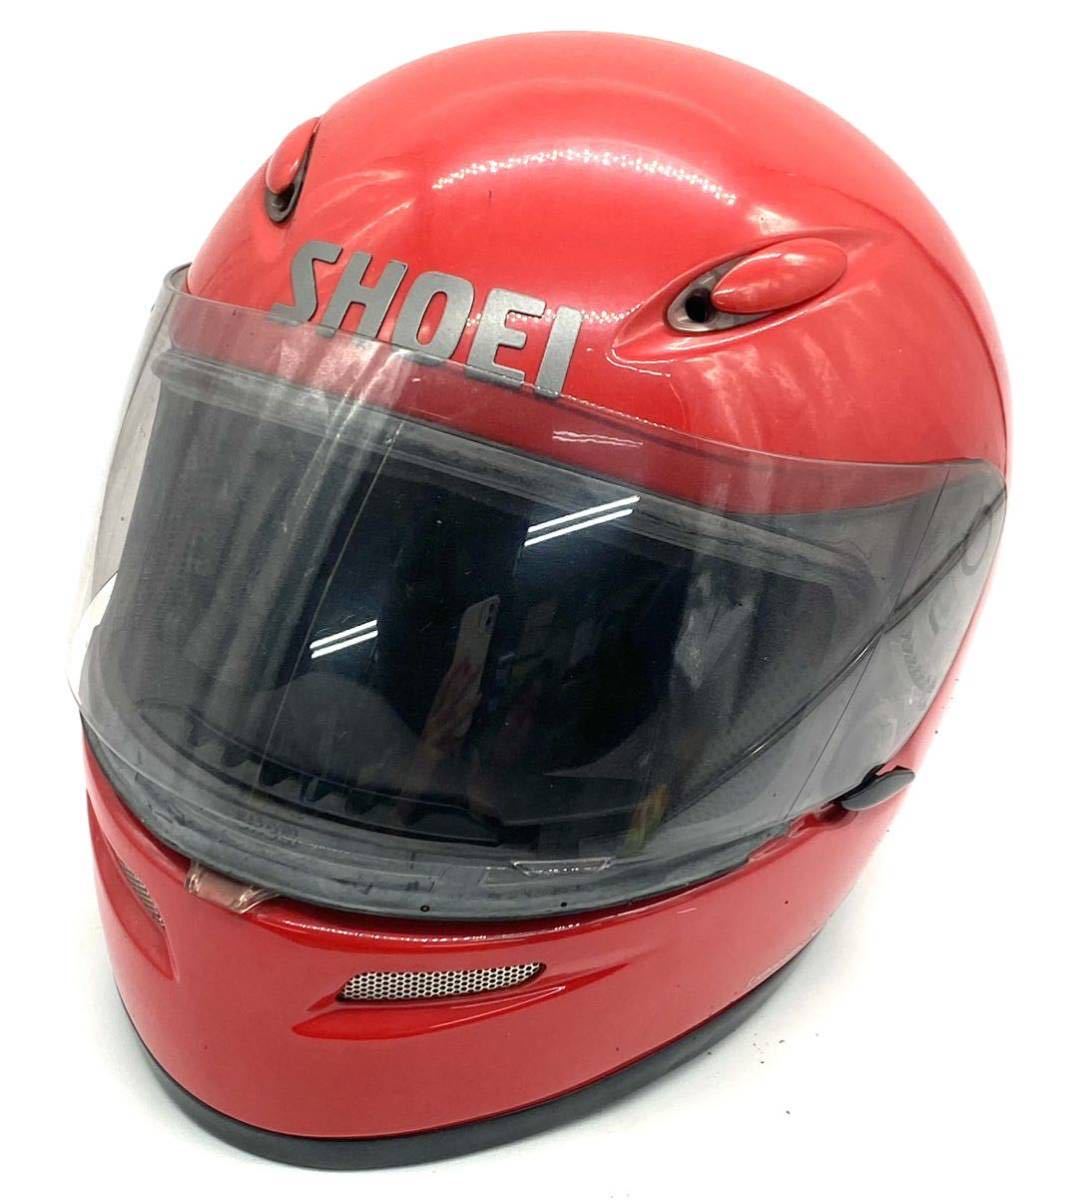 SHOEI ヘルメット T8133 Z-4 SWIFT MOVER S 55-56cm ショウエイ_画像1